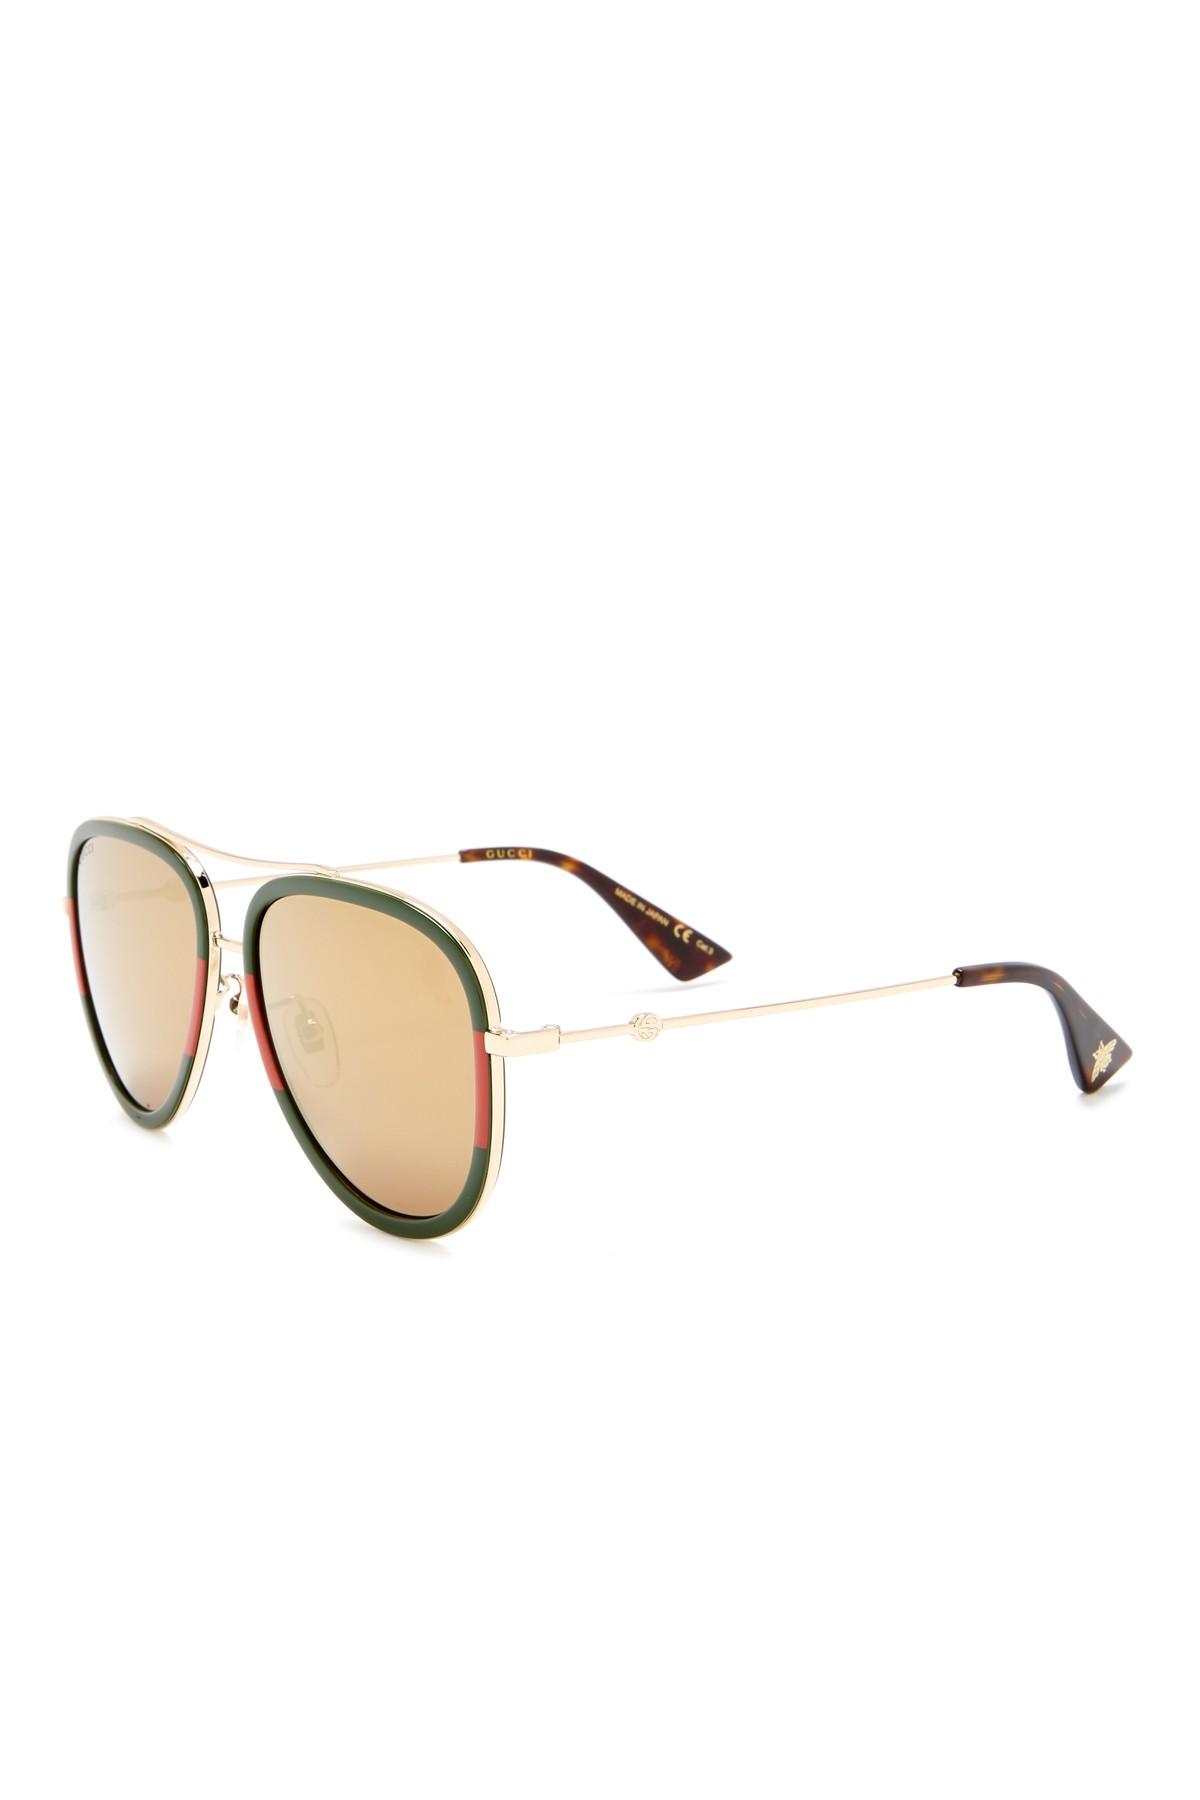 Gucci 57mm Aviator Sunglasses - Lyst